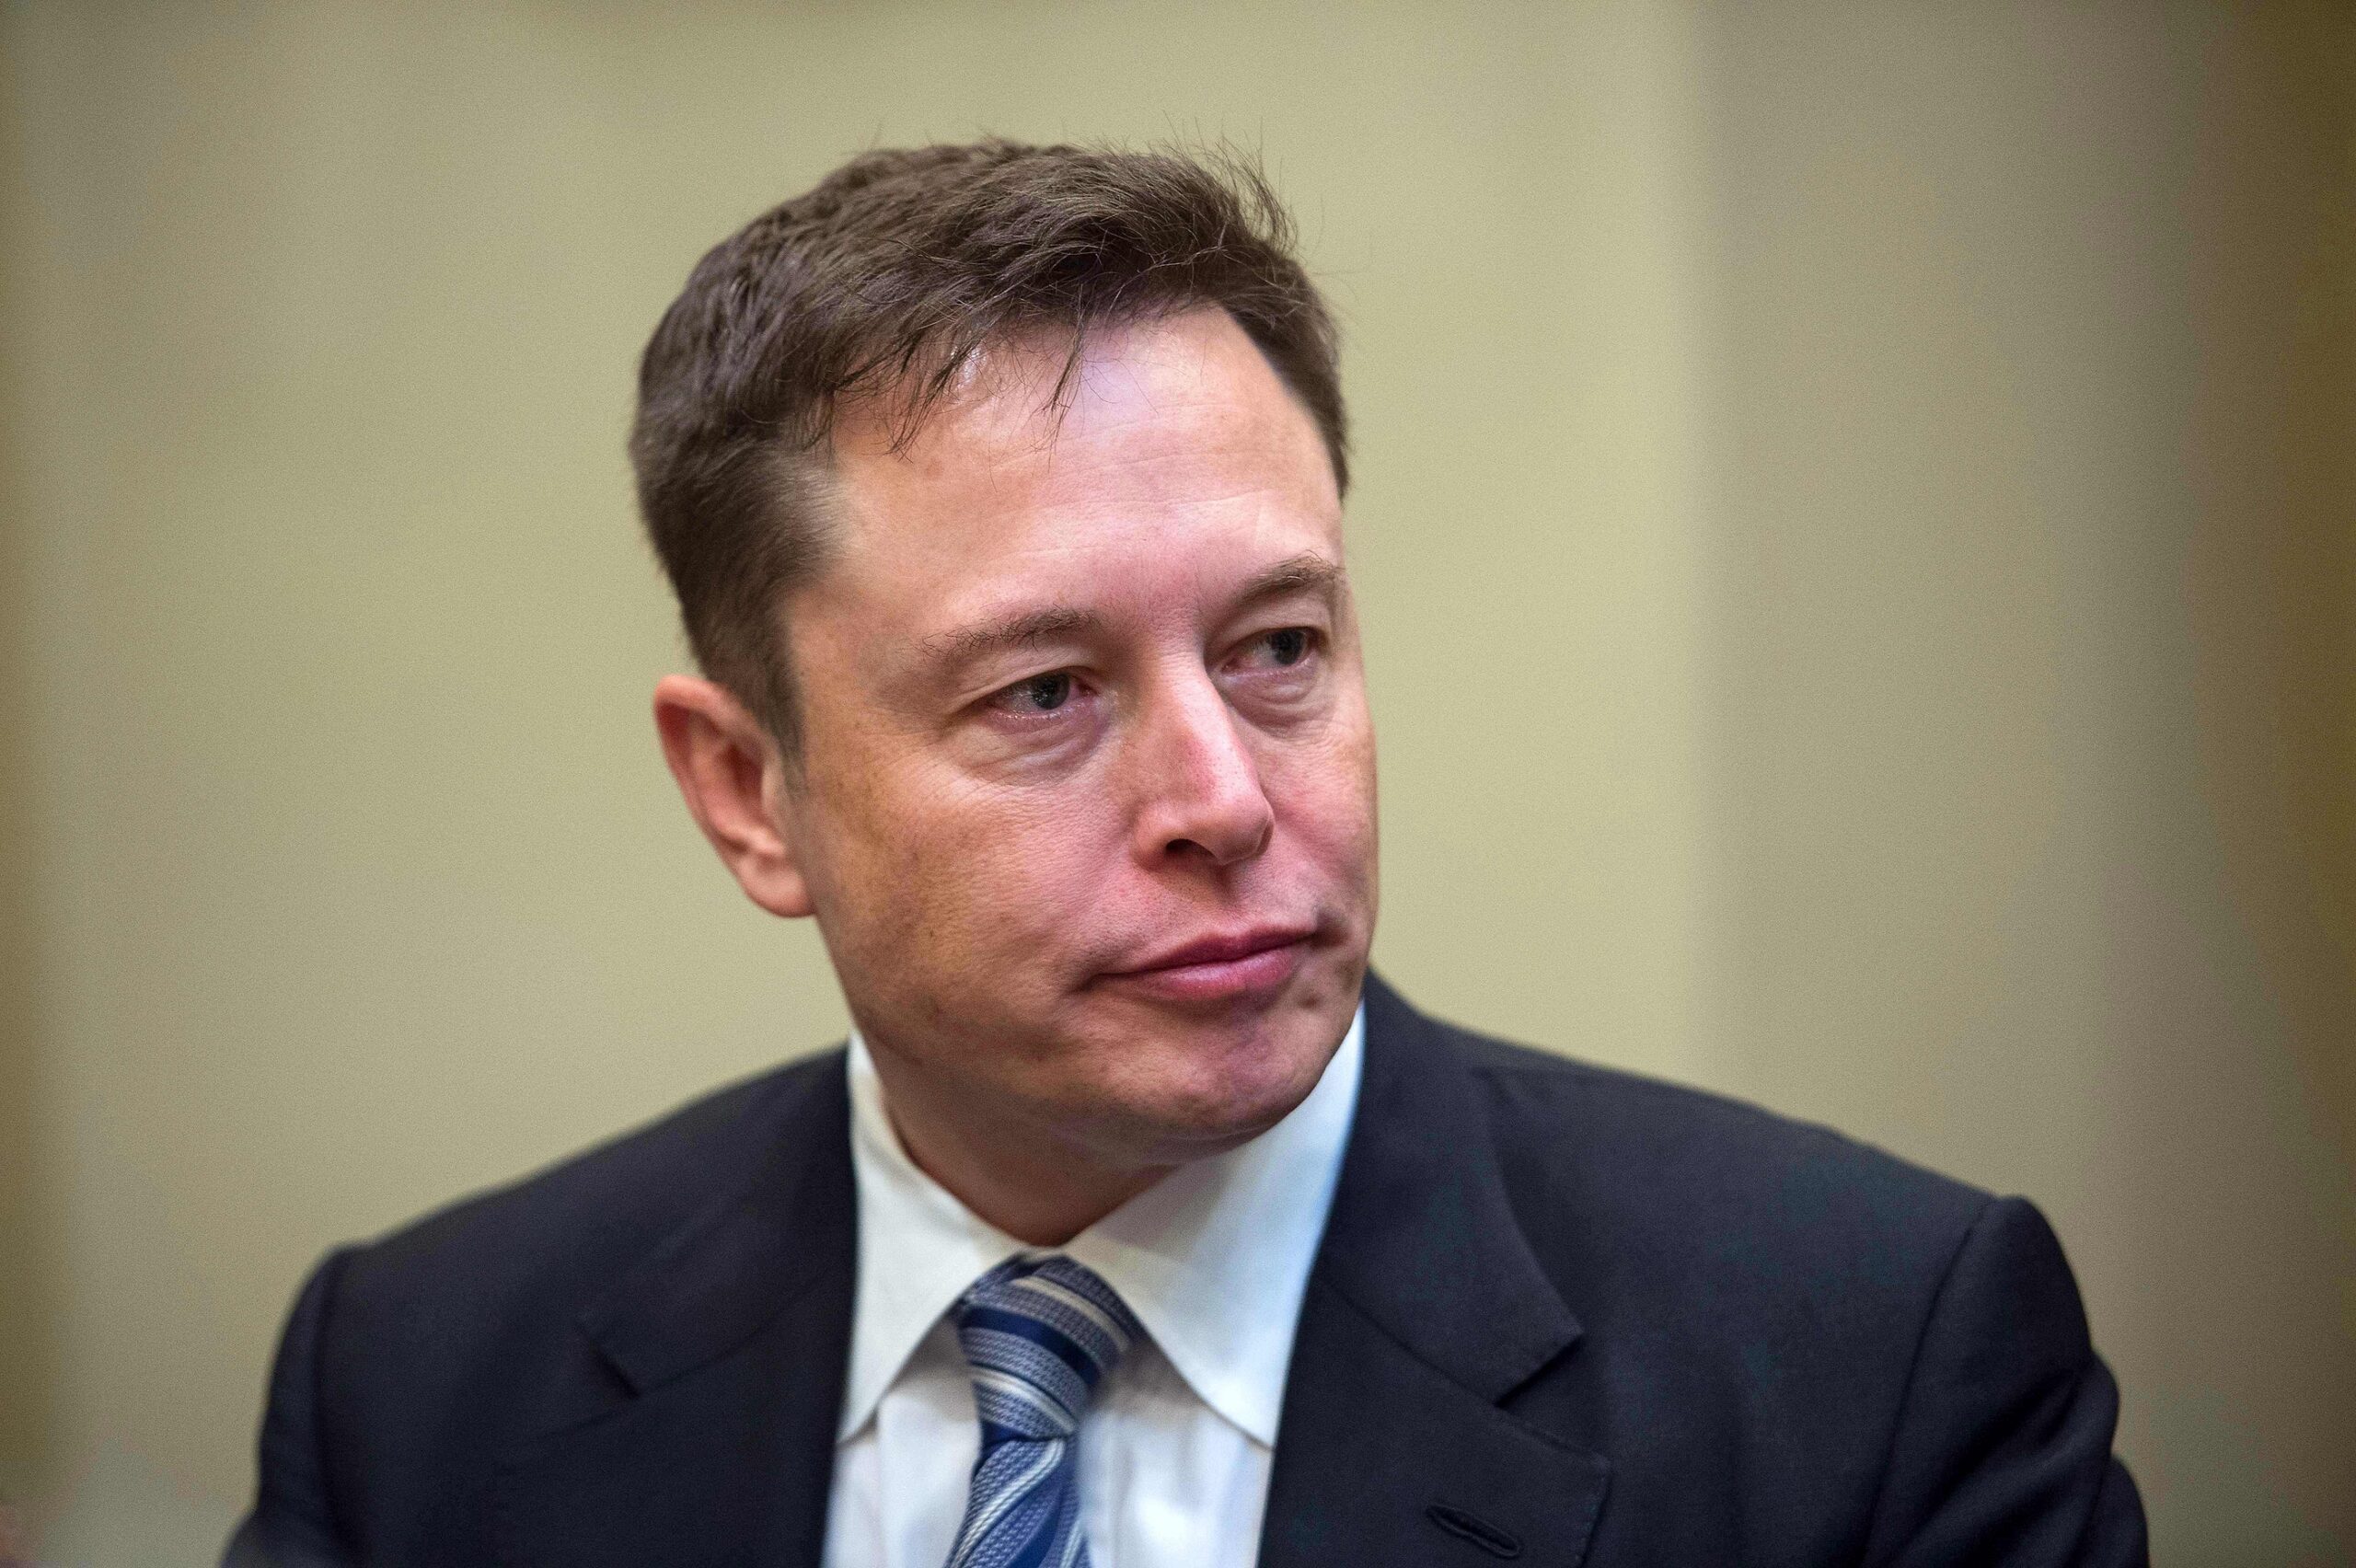 Elon Musk Loses Bid to End SEC ‘Muzzle’ Over Tweets